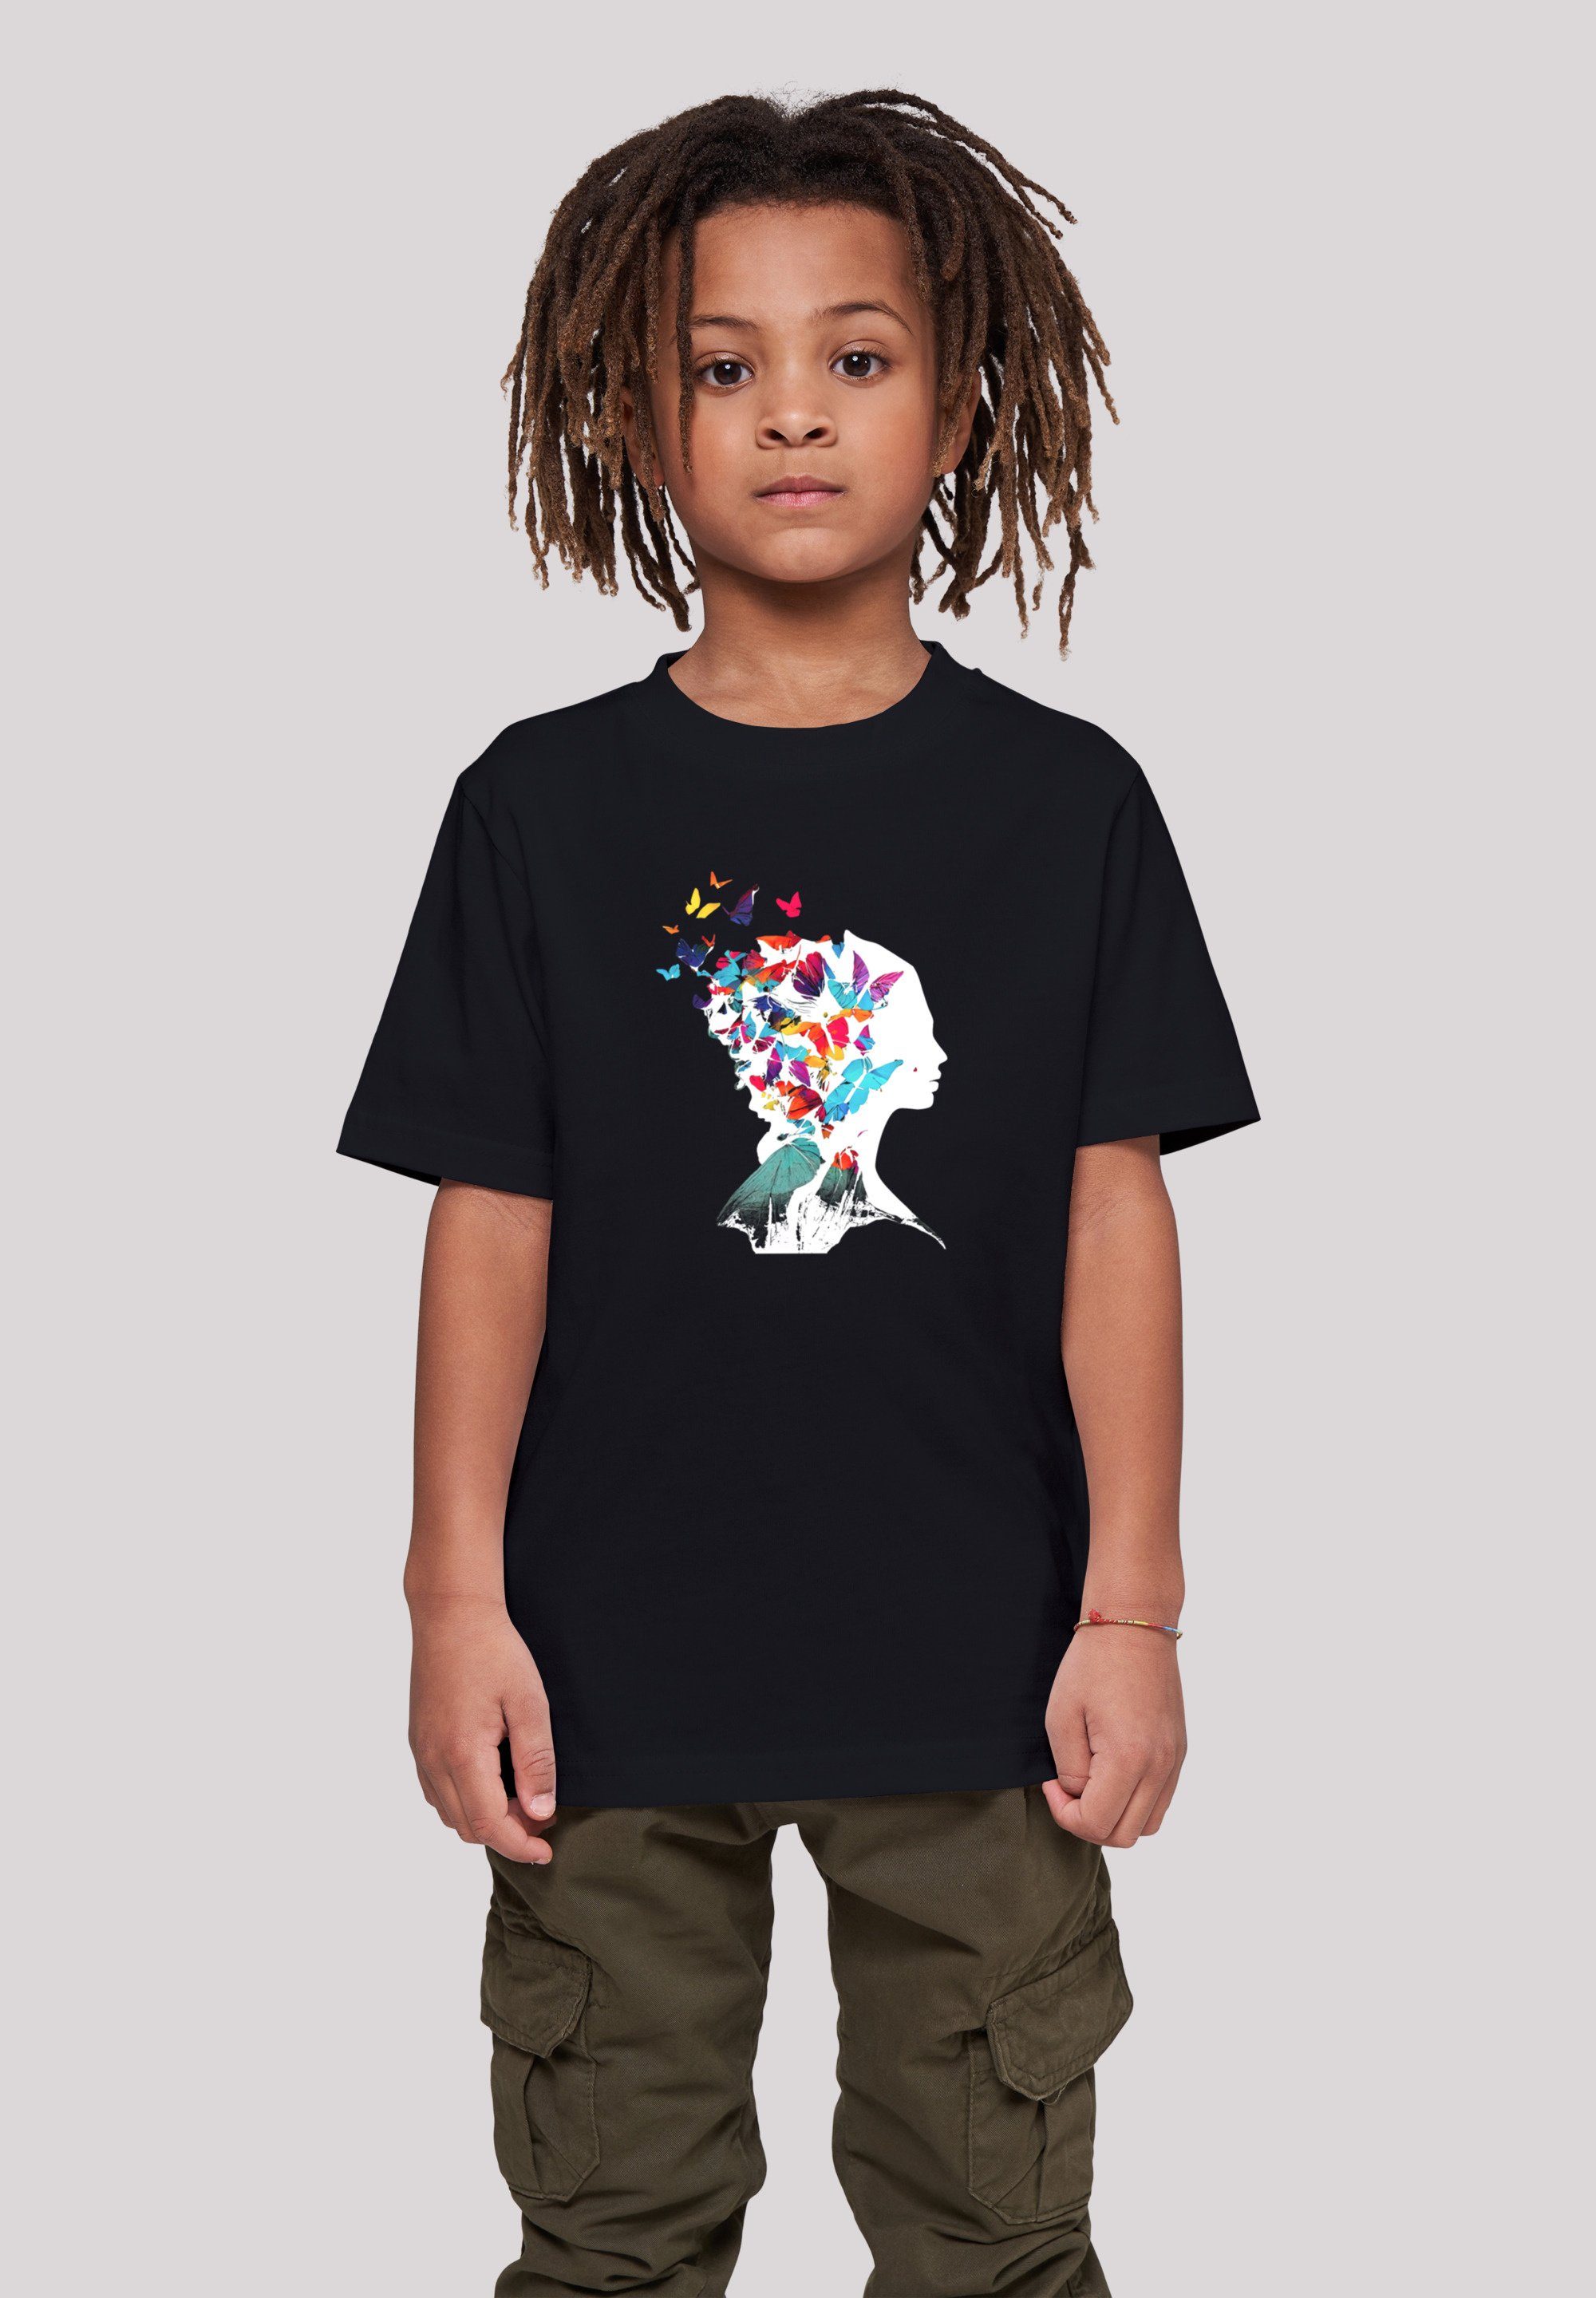 F4NT4STIC T-Shirt Schmetterling Silhouette TEE UNISEX Print schwarz